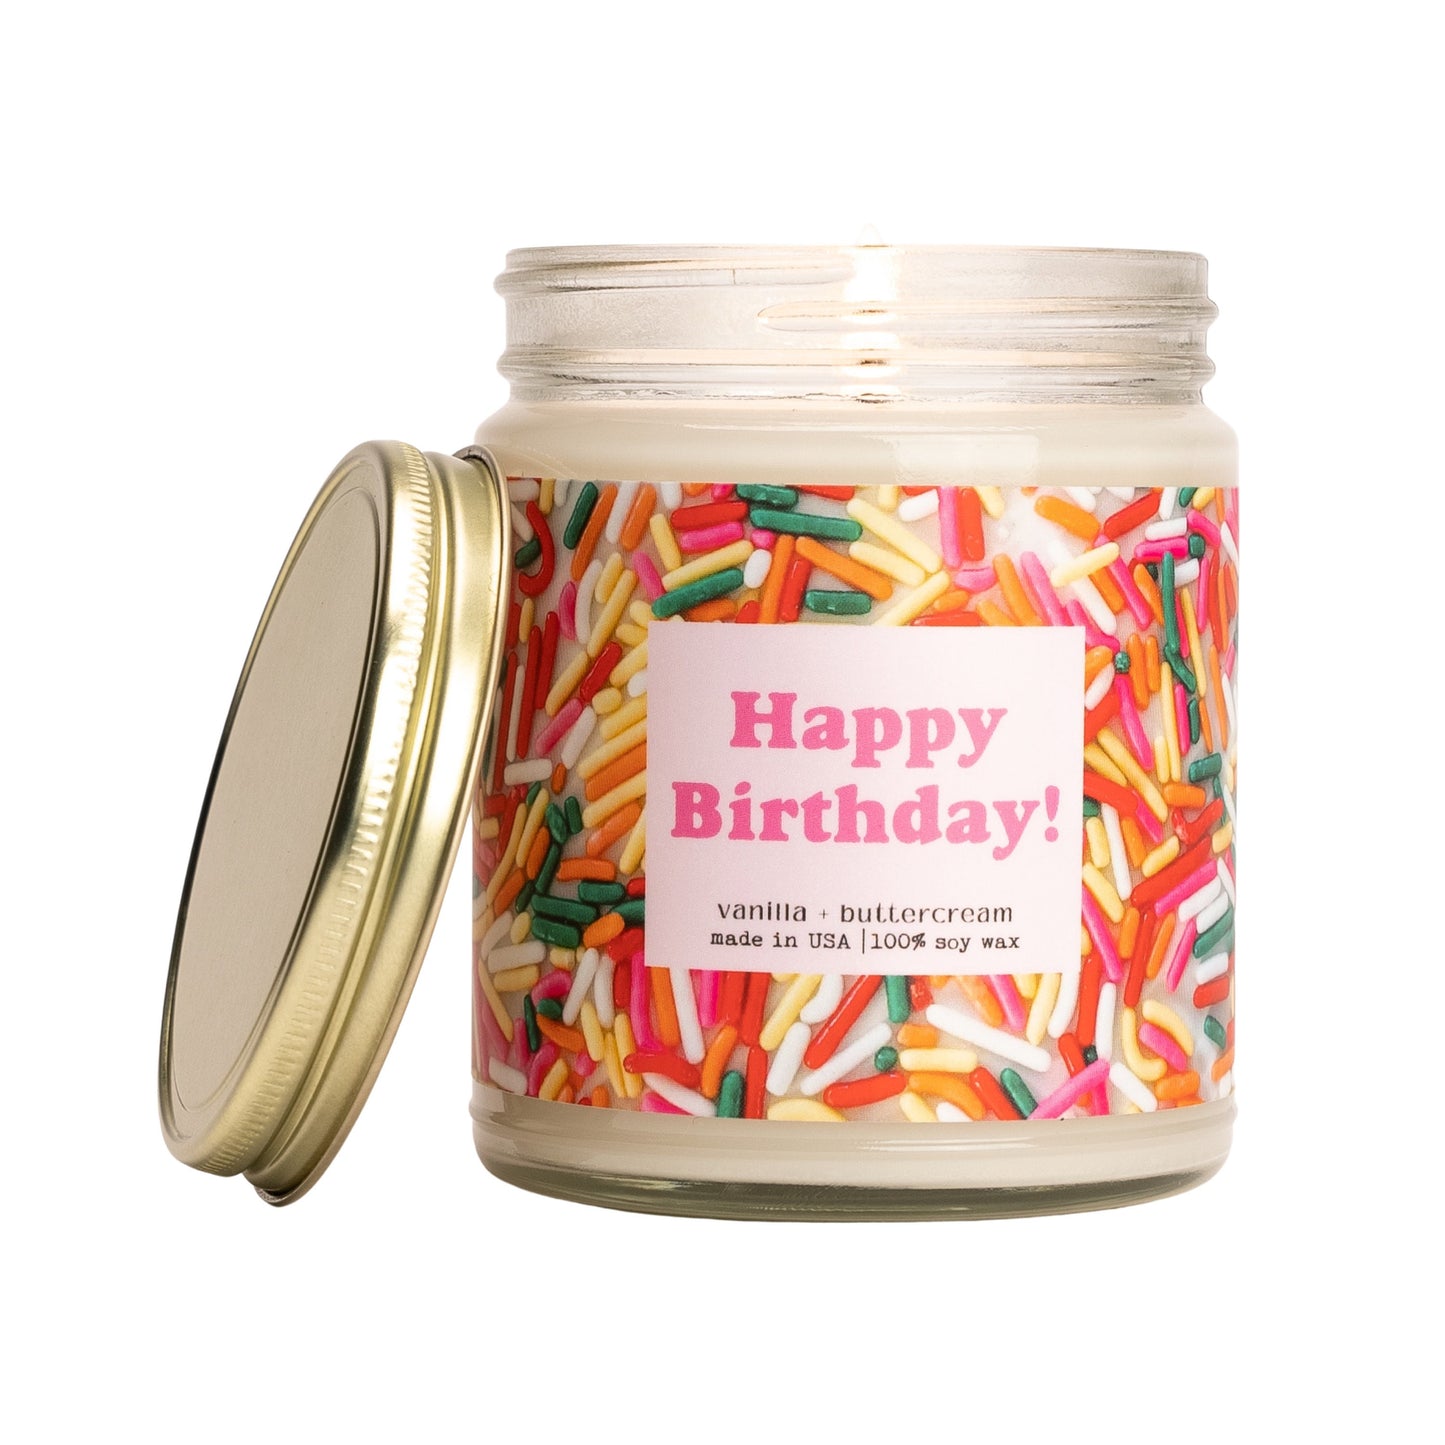 Happy Birthday (Sprinkles) - 9oz Glass Jar Soy Candle - Vanilla & Buttercream Scent